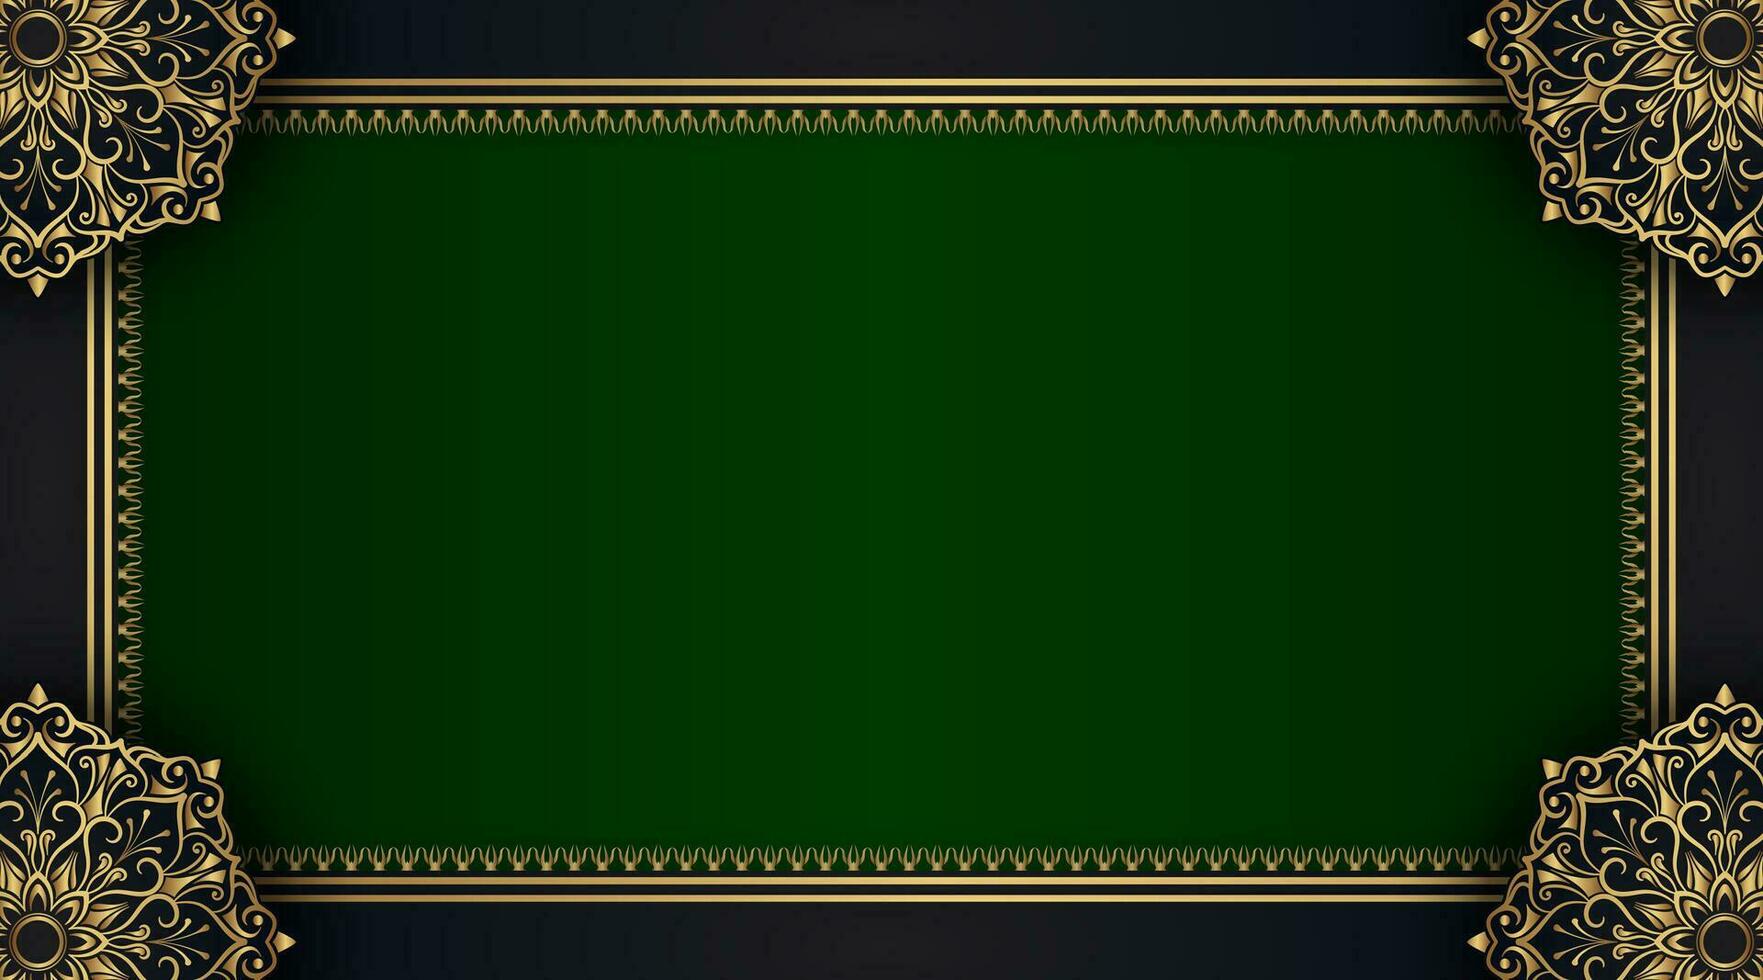 Luxury mandala background, green and black vector